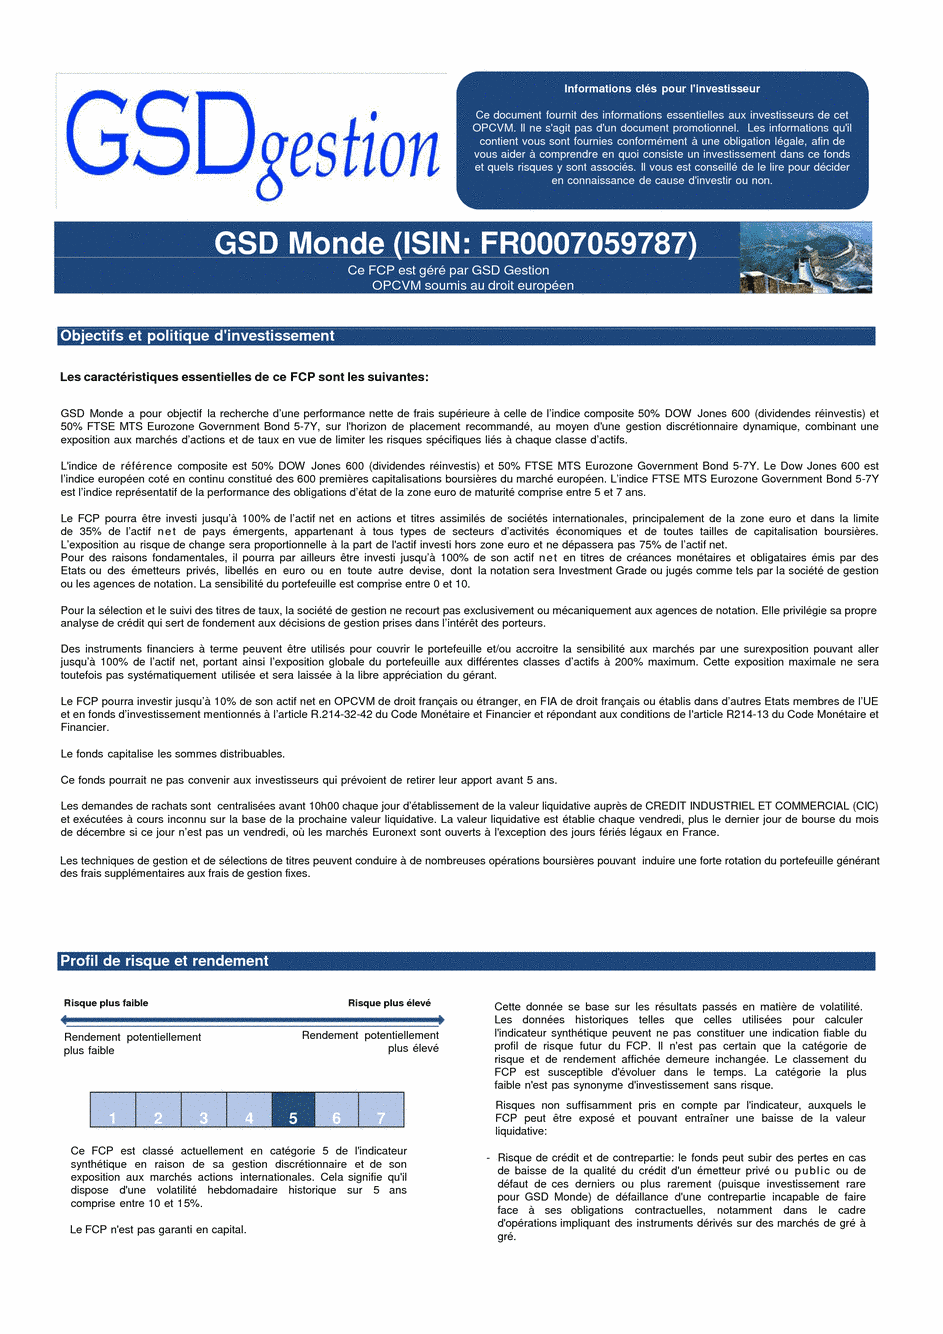 DICI-Prospectus GSD Monde - 23/02/2018 - French